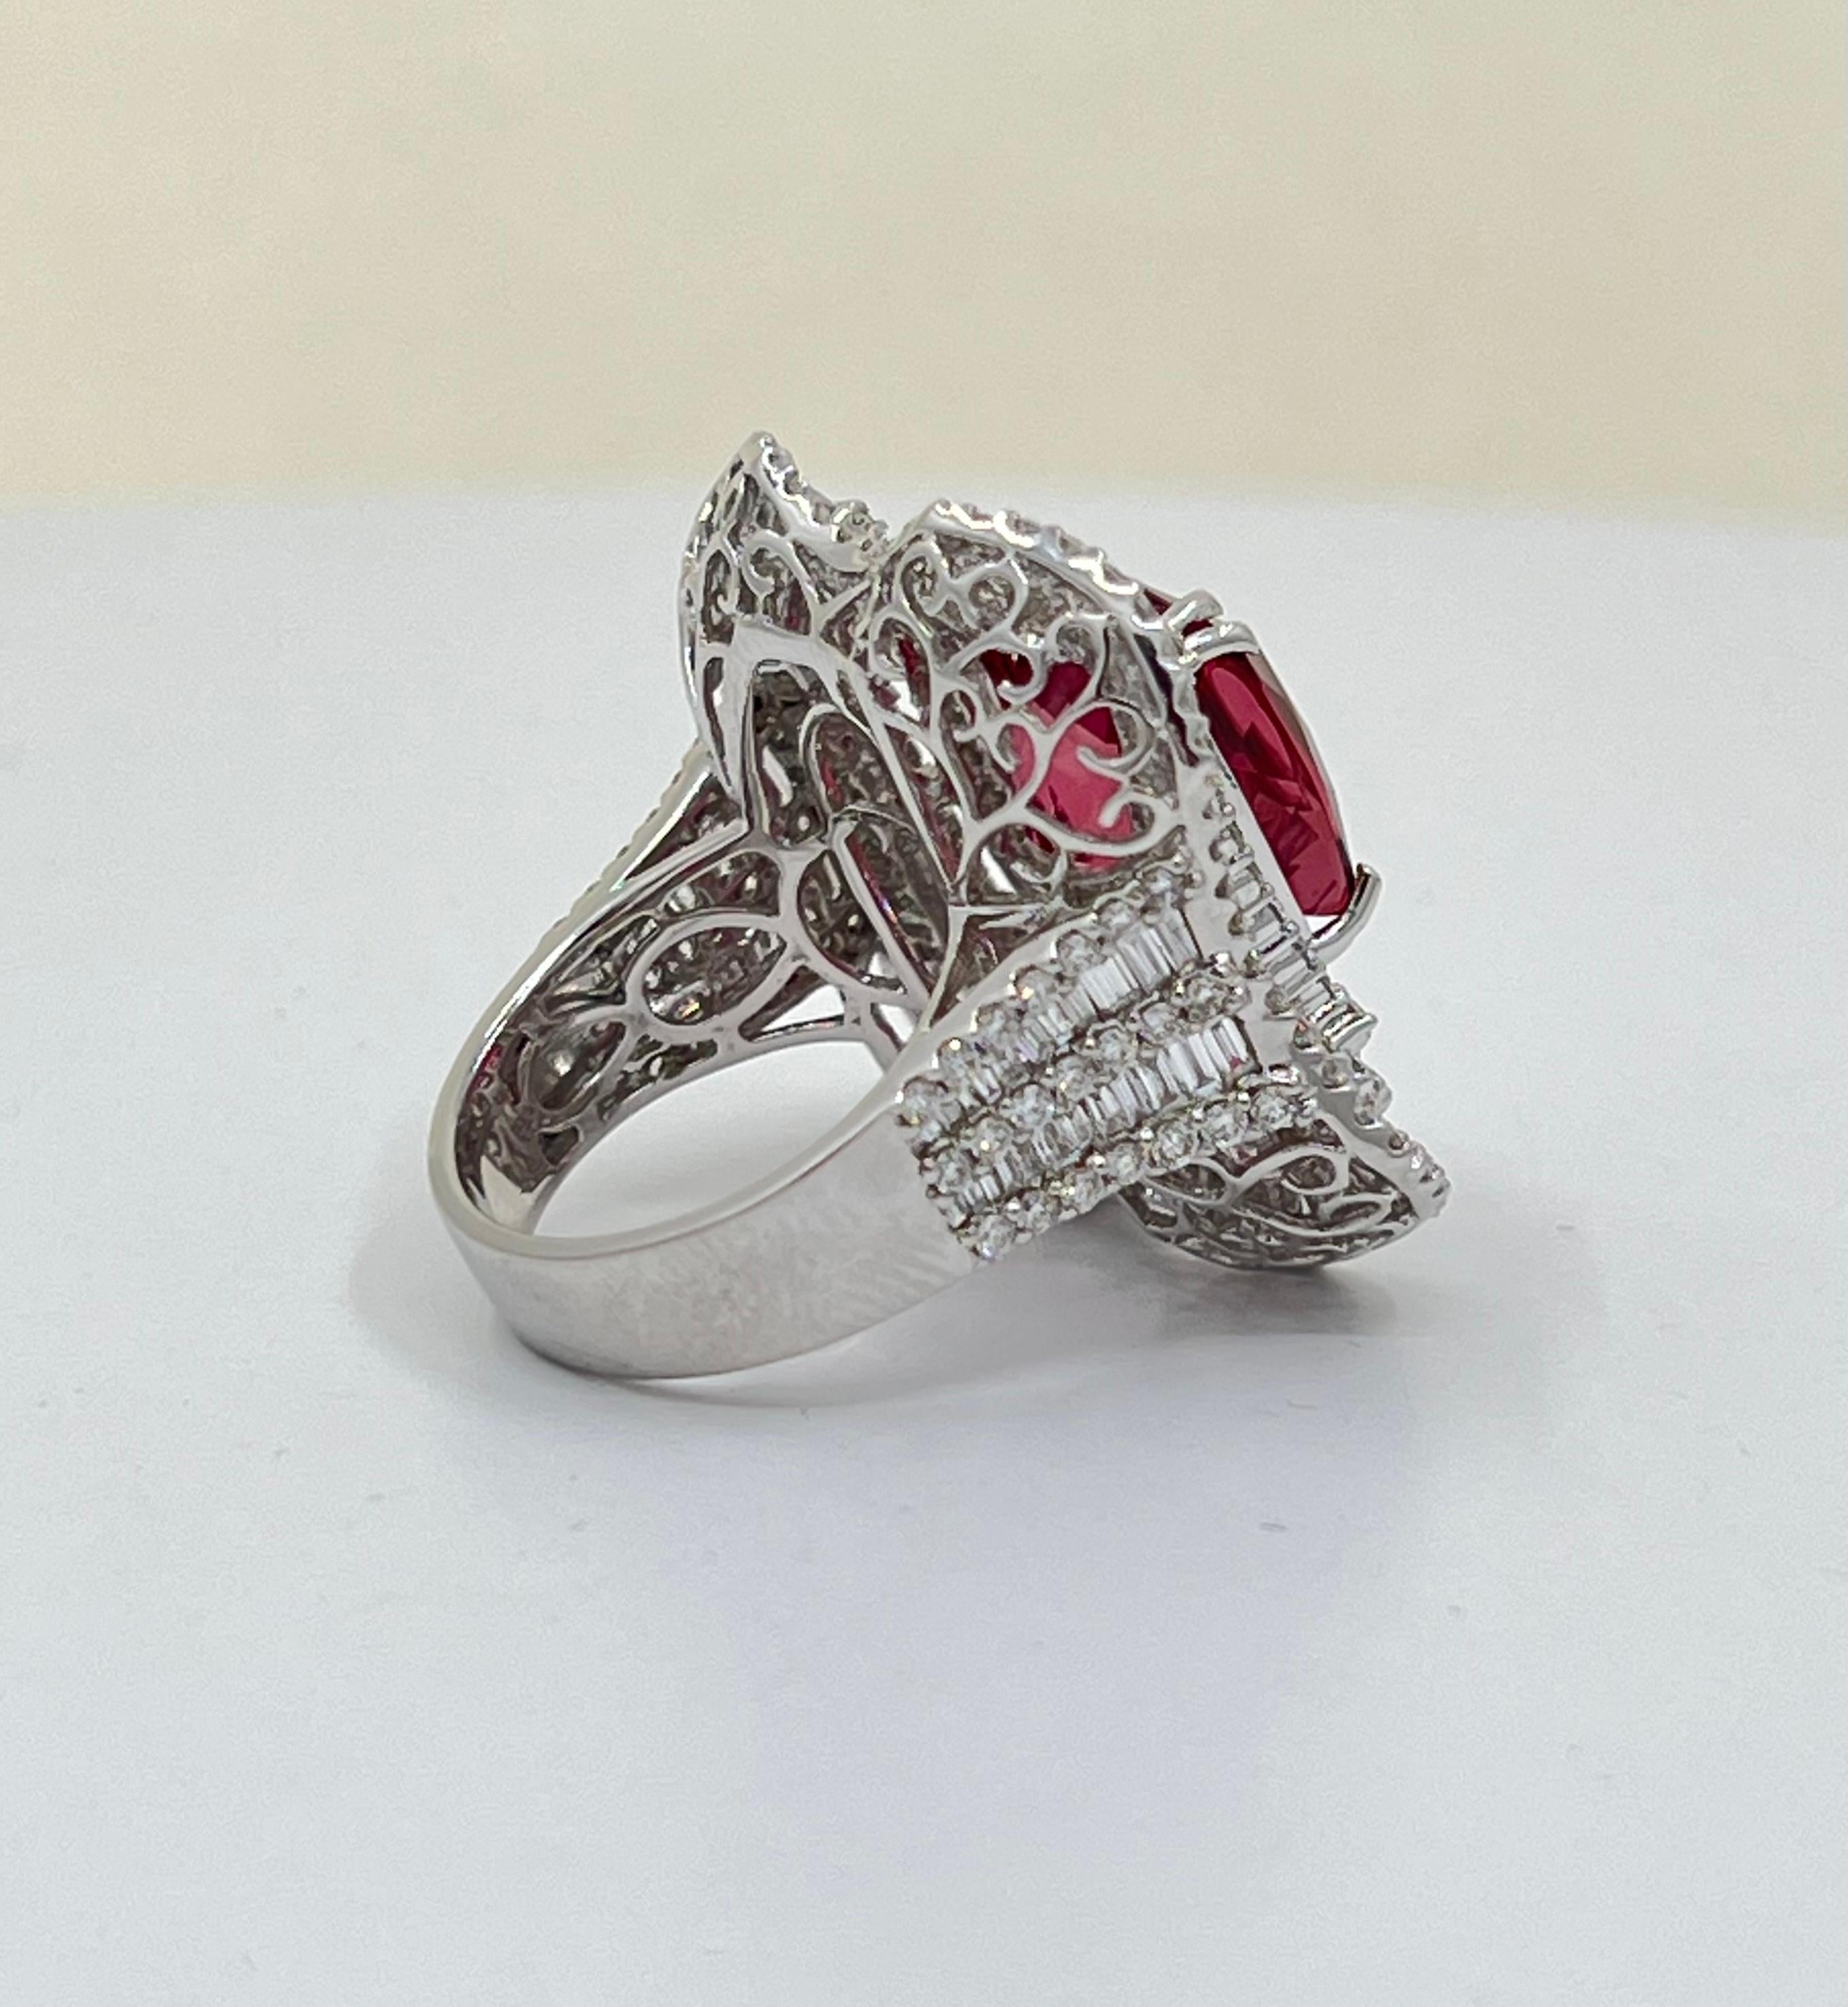 Artisan Exquisite 20.56 Carat Vivid Pink Rubellite and Diamond Ballerina Style 18K Ring